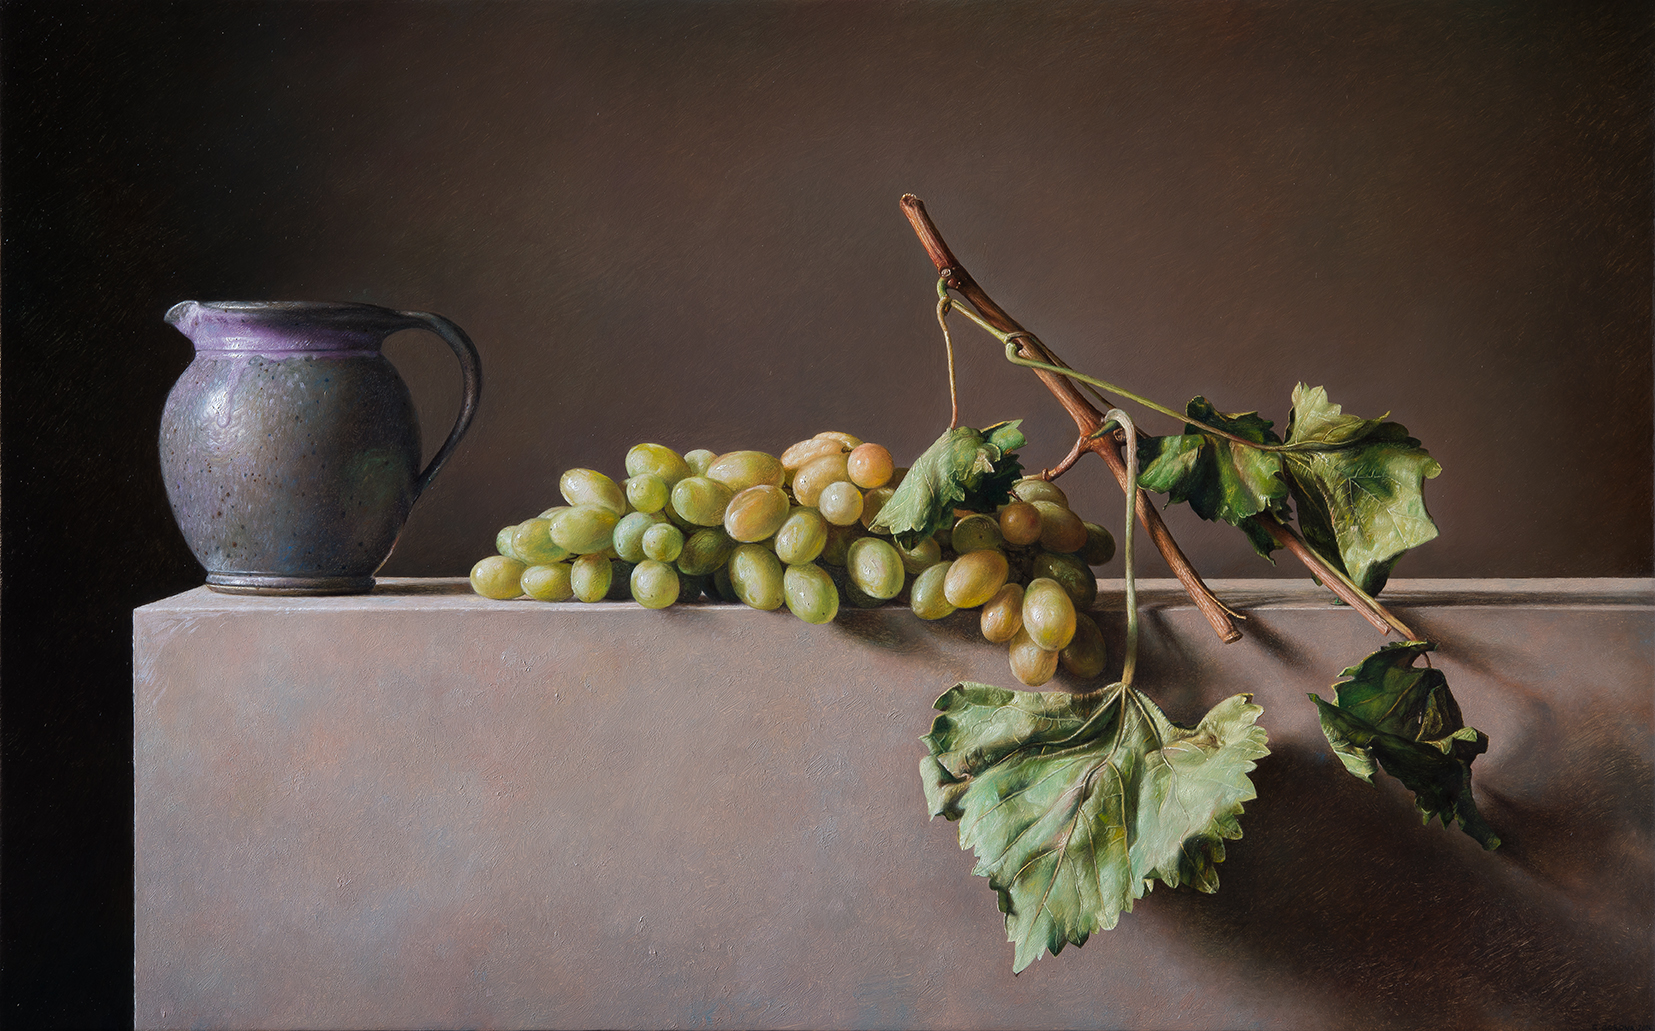 L'Uva di Franco - 2016 olio su tavola incamottata cm 50x80 © Gianluca Corona